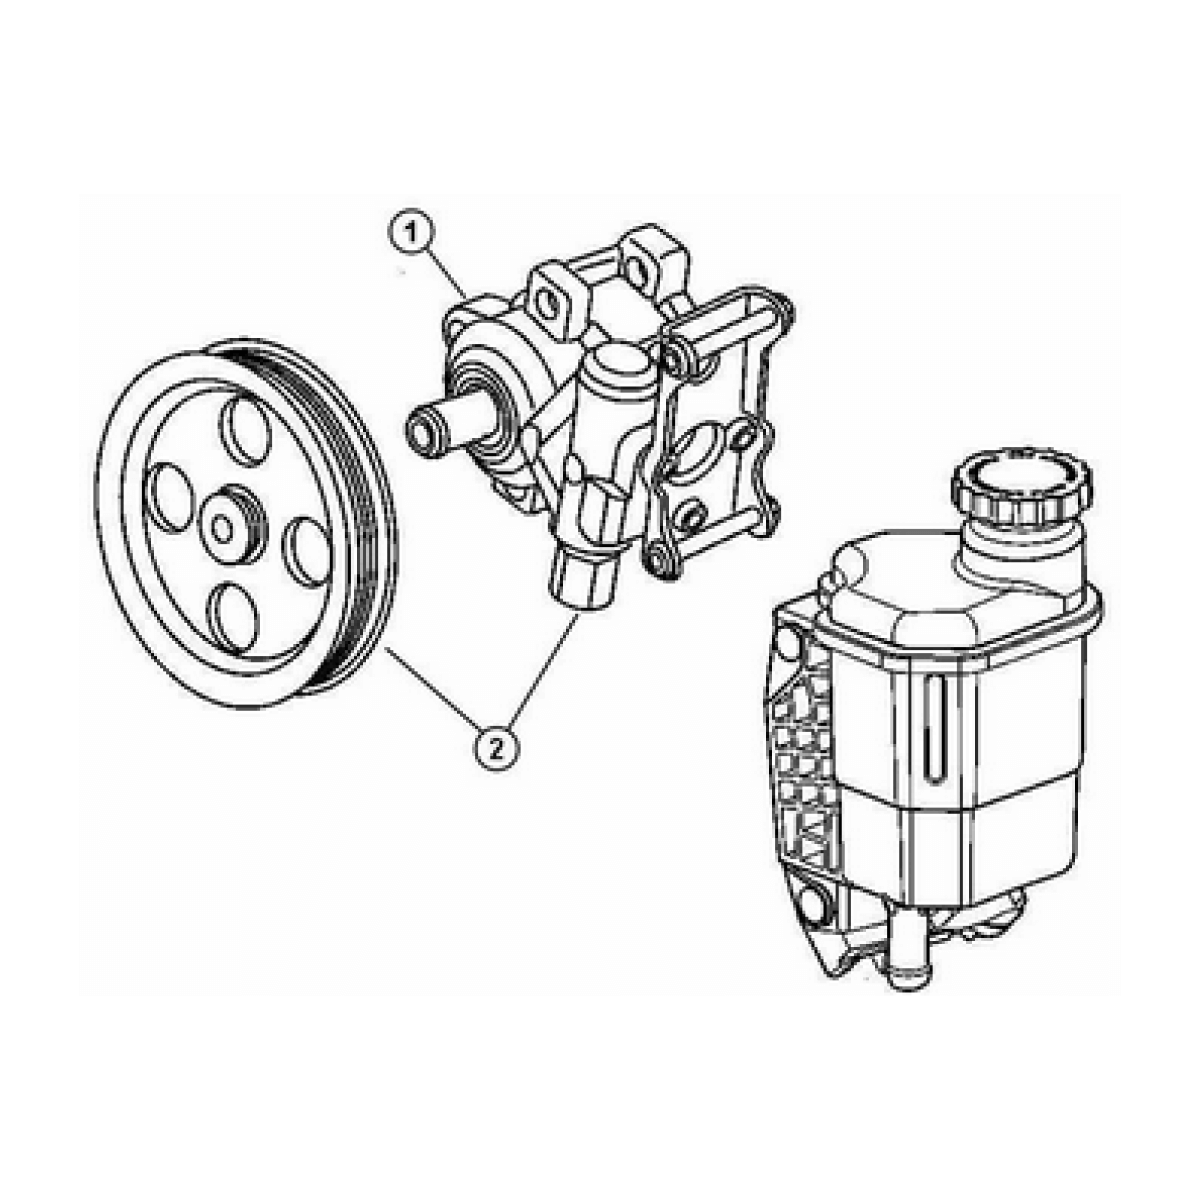 2003 to 2013 Dodge Ram Power Steering Pump Upgrade Kit 